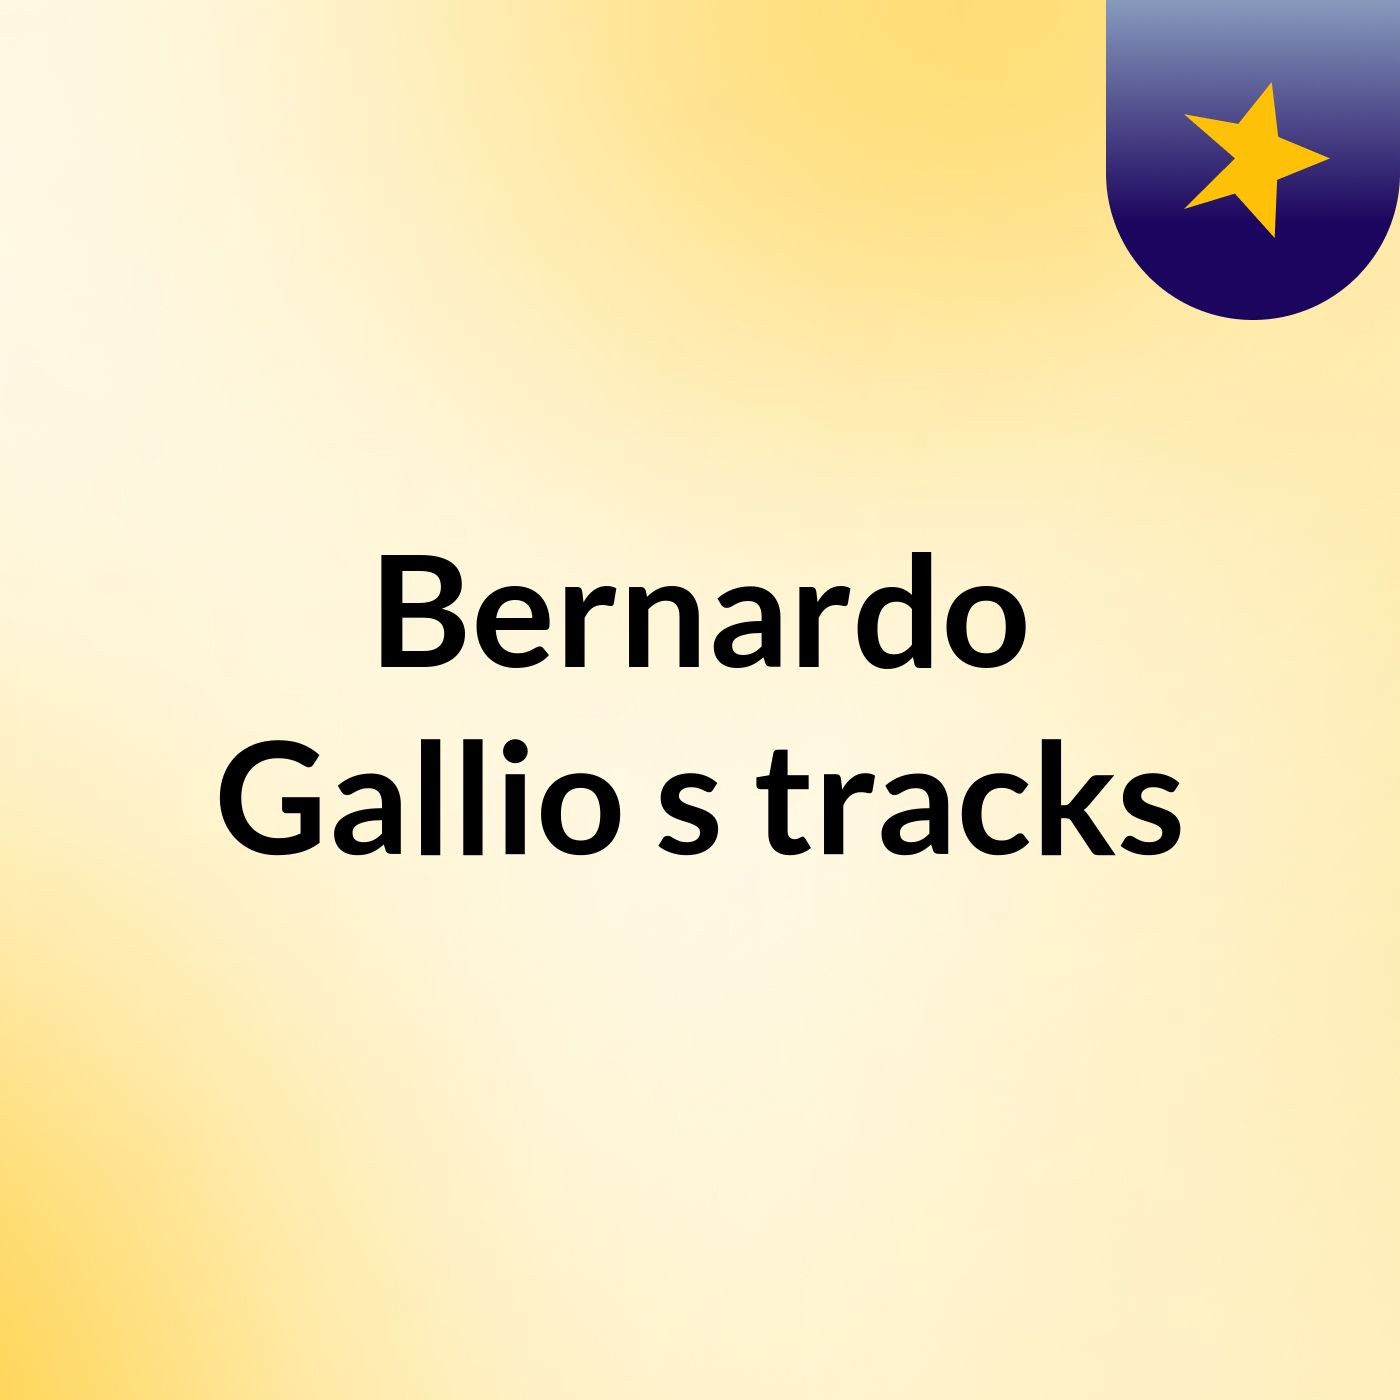 Bernardo Gallio's tracks